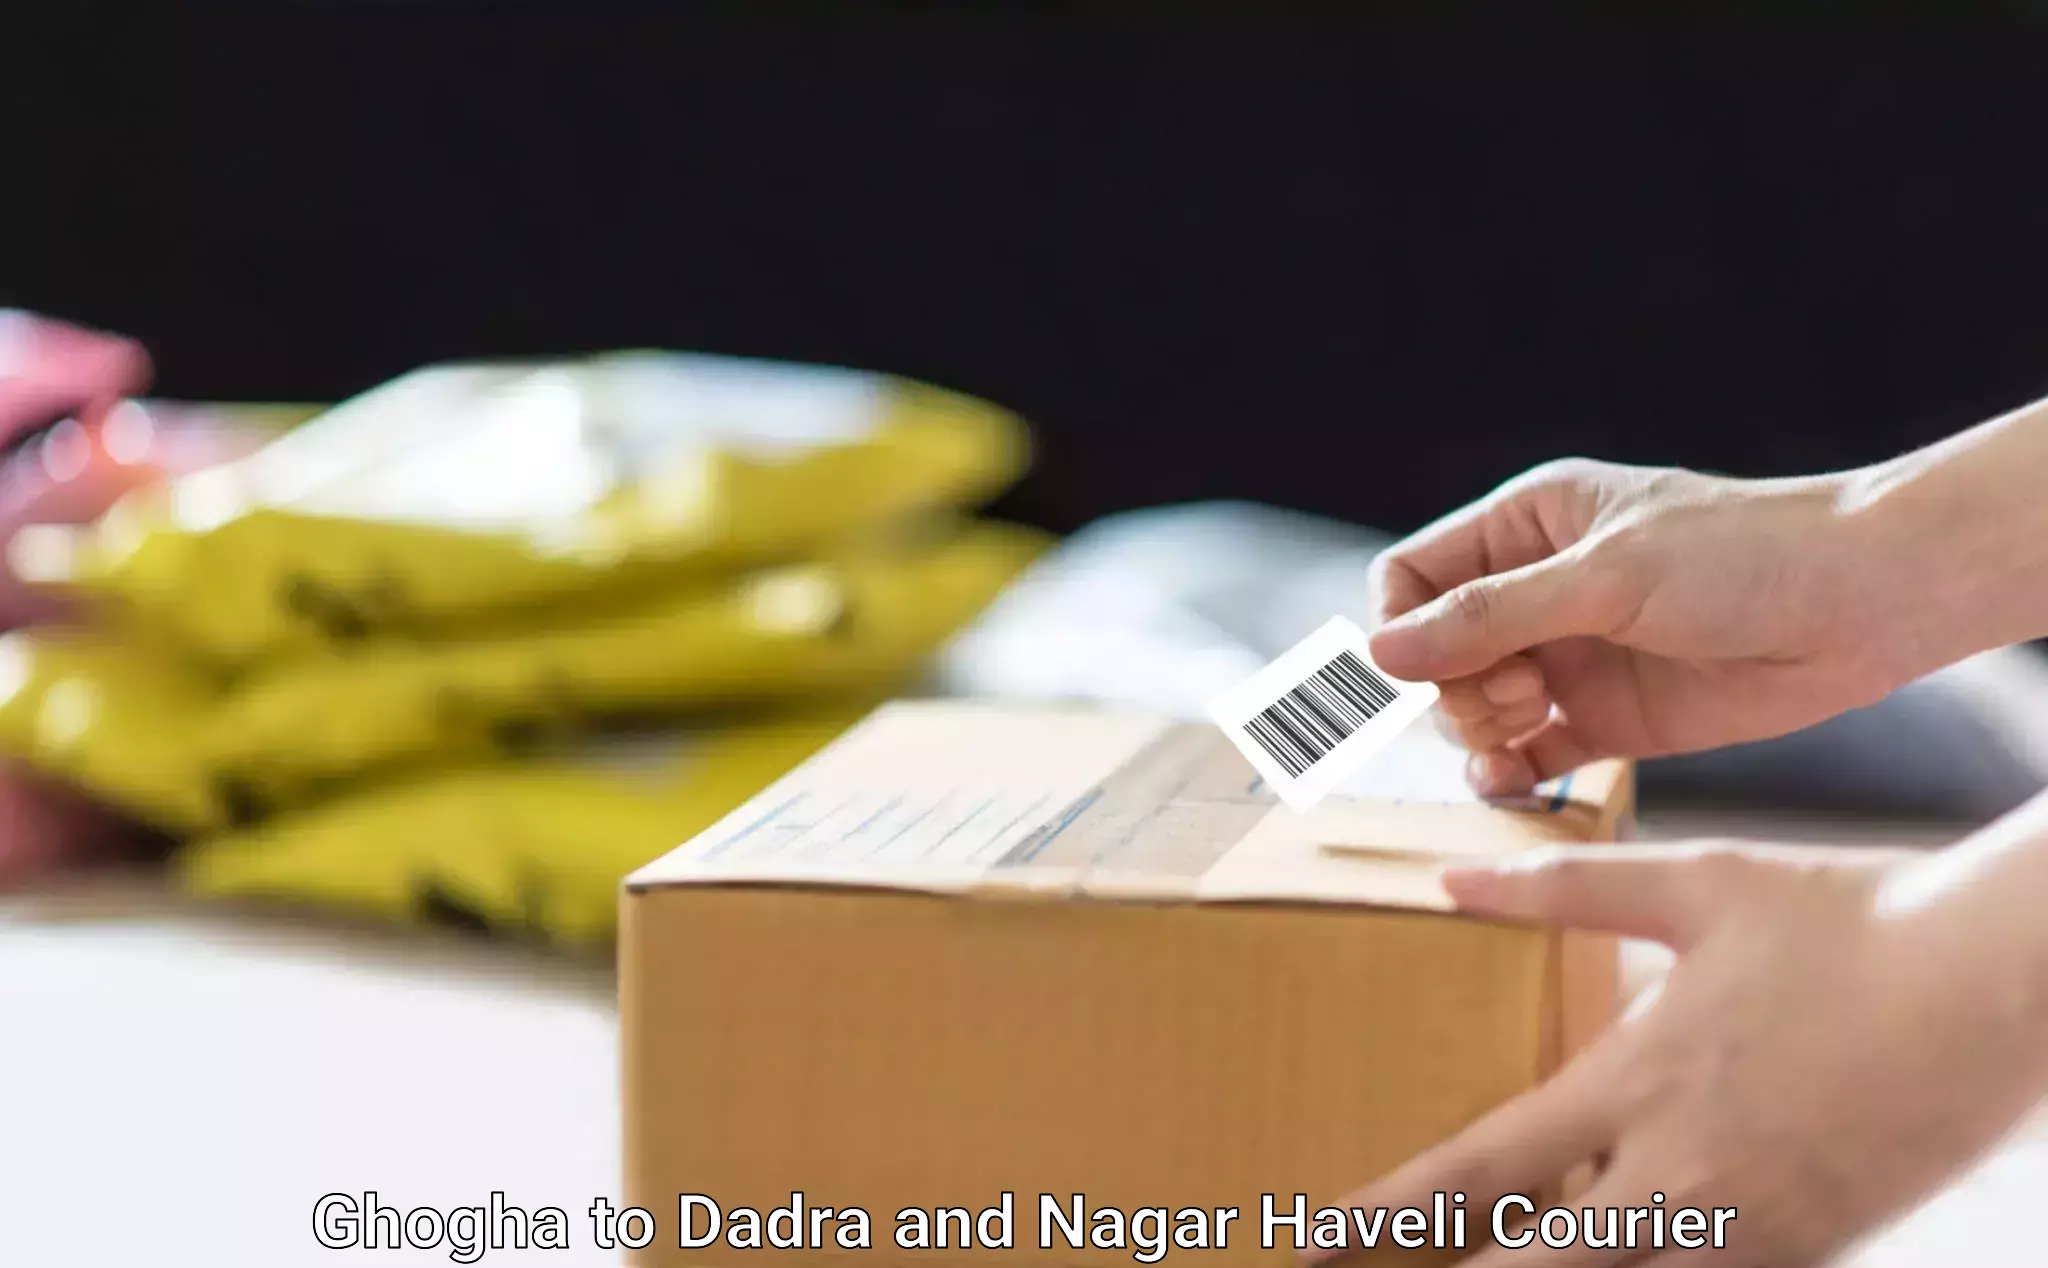 Budget-friendly movers Ghogha to Dadra and Nagar Haveli